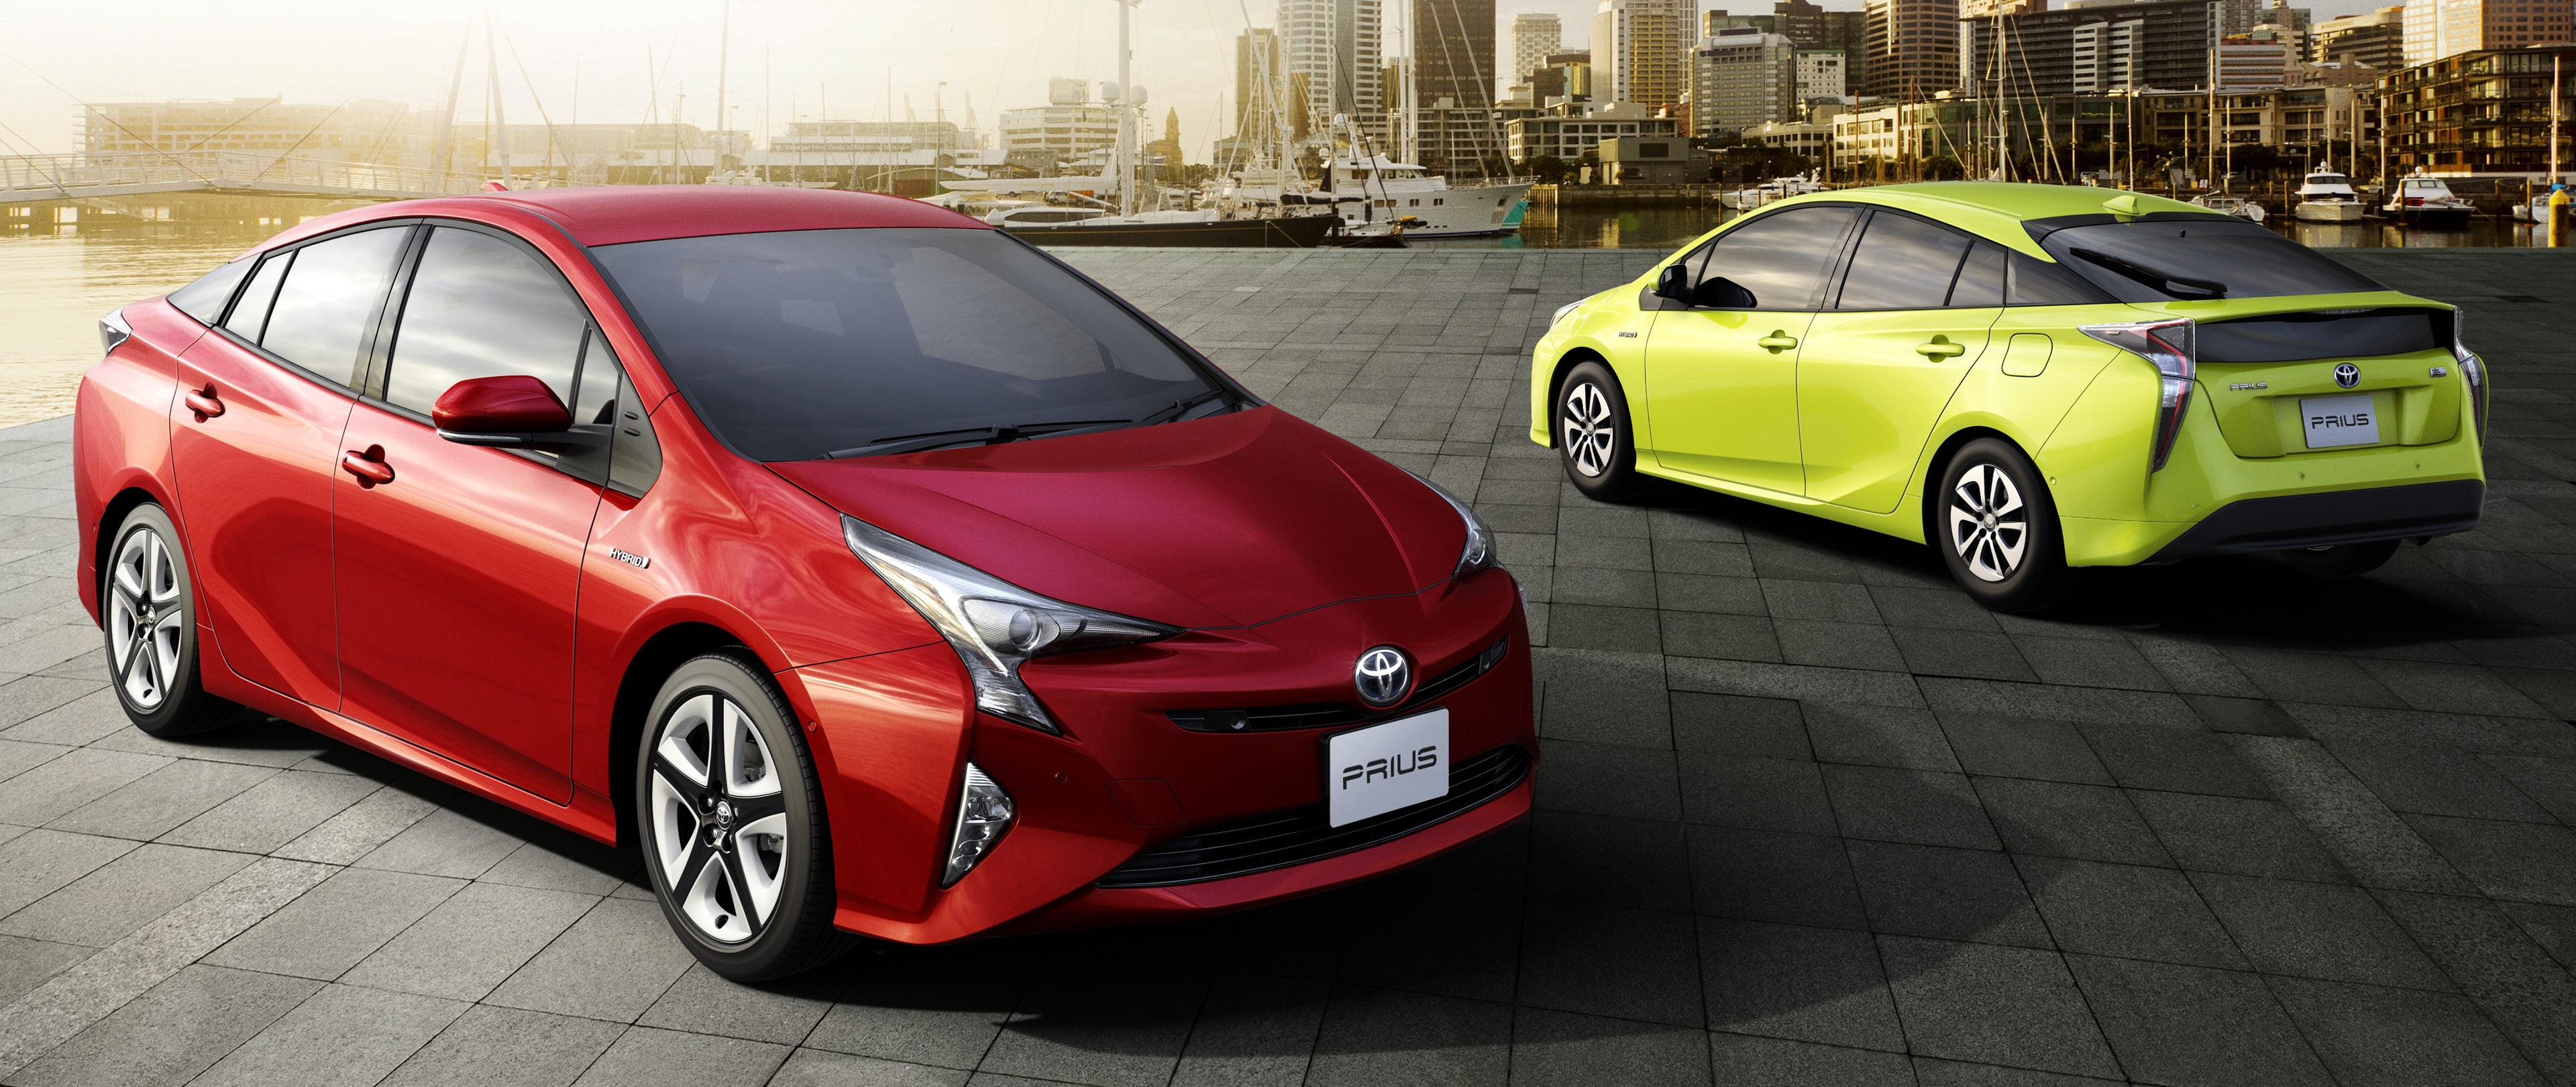 Toyota Prius, car, vehicle, electric car, mode of transportation